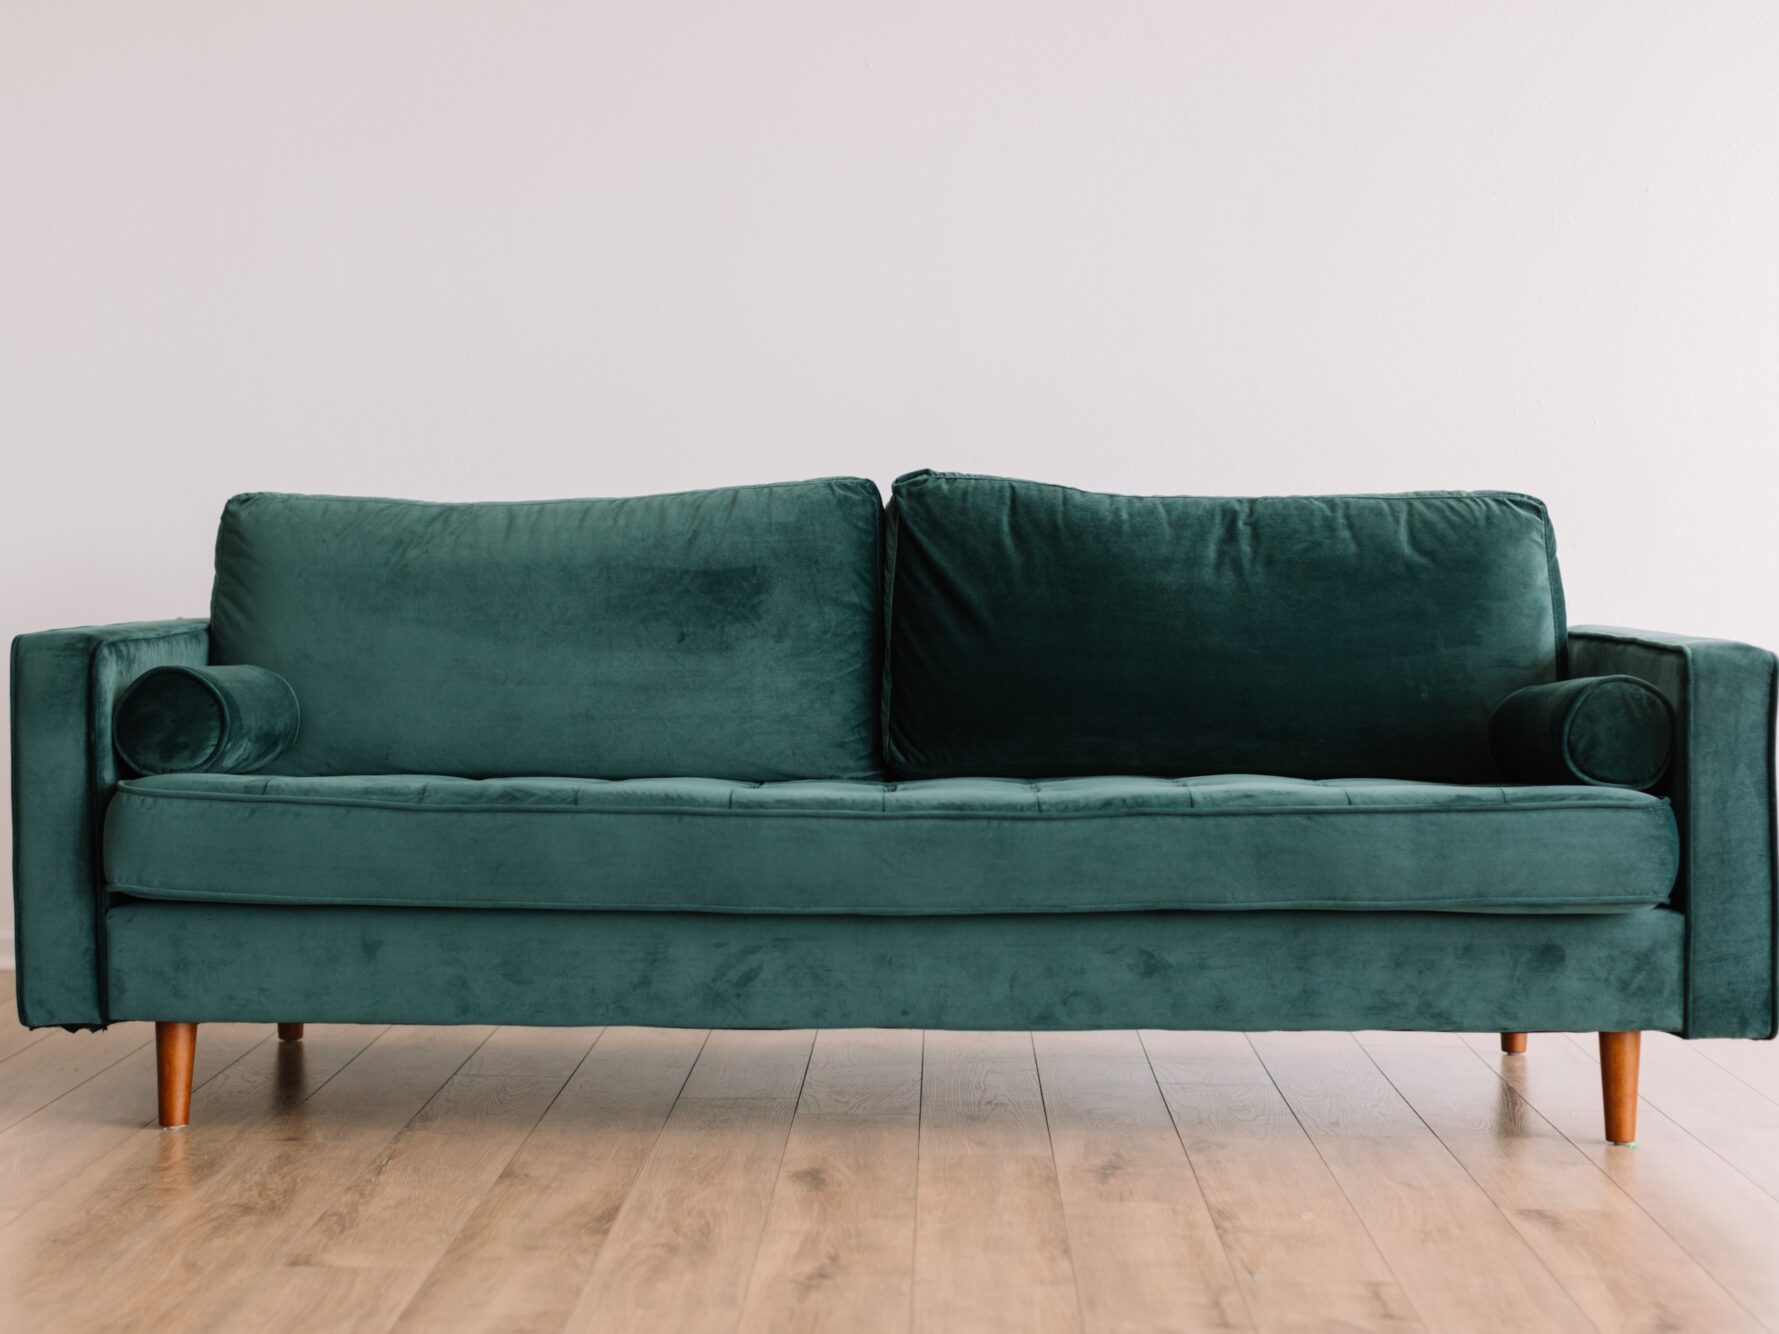 how to choose a sofa color